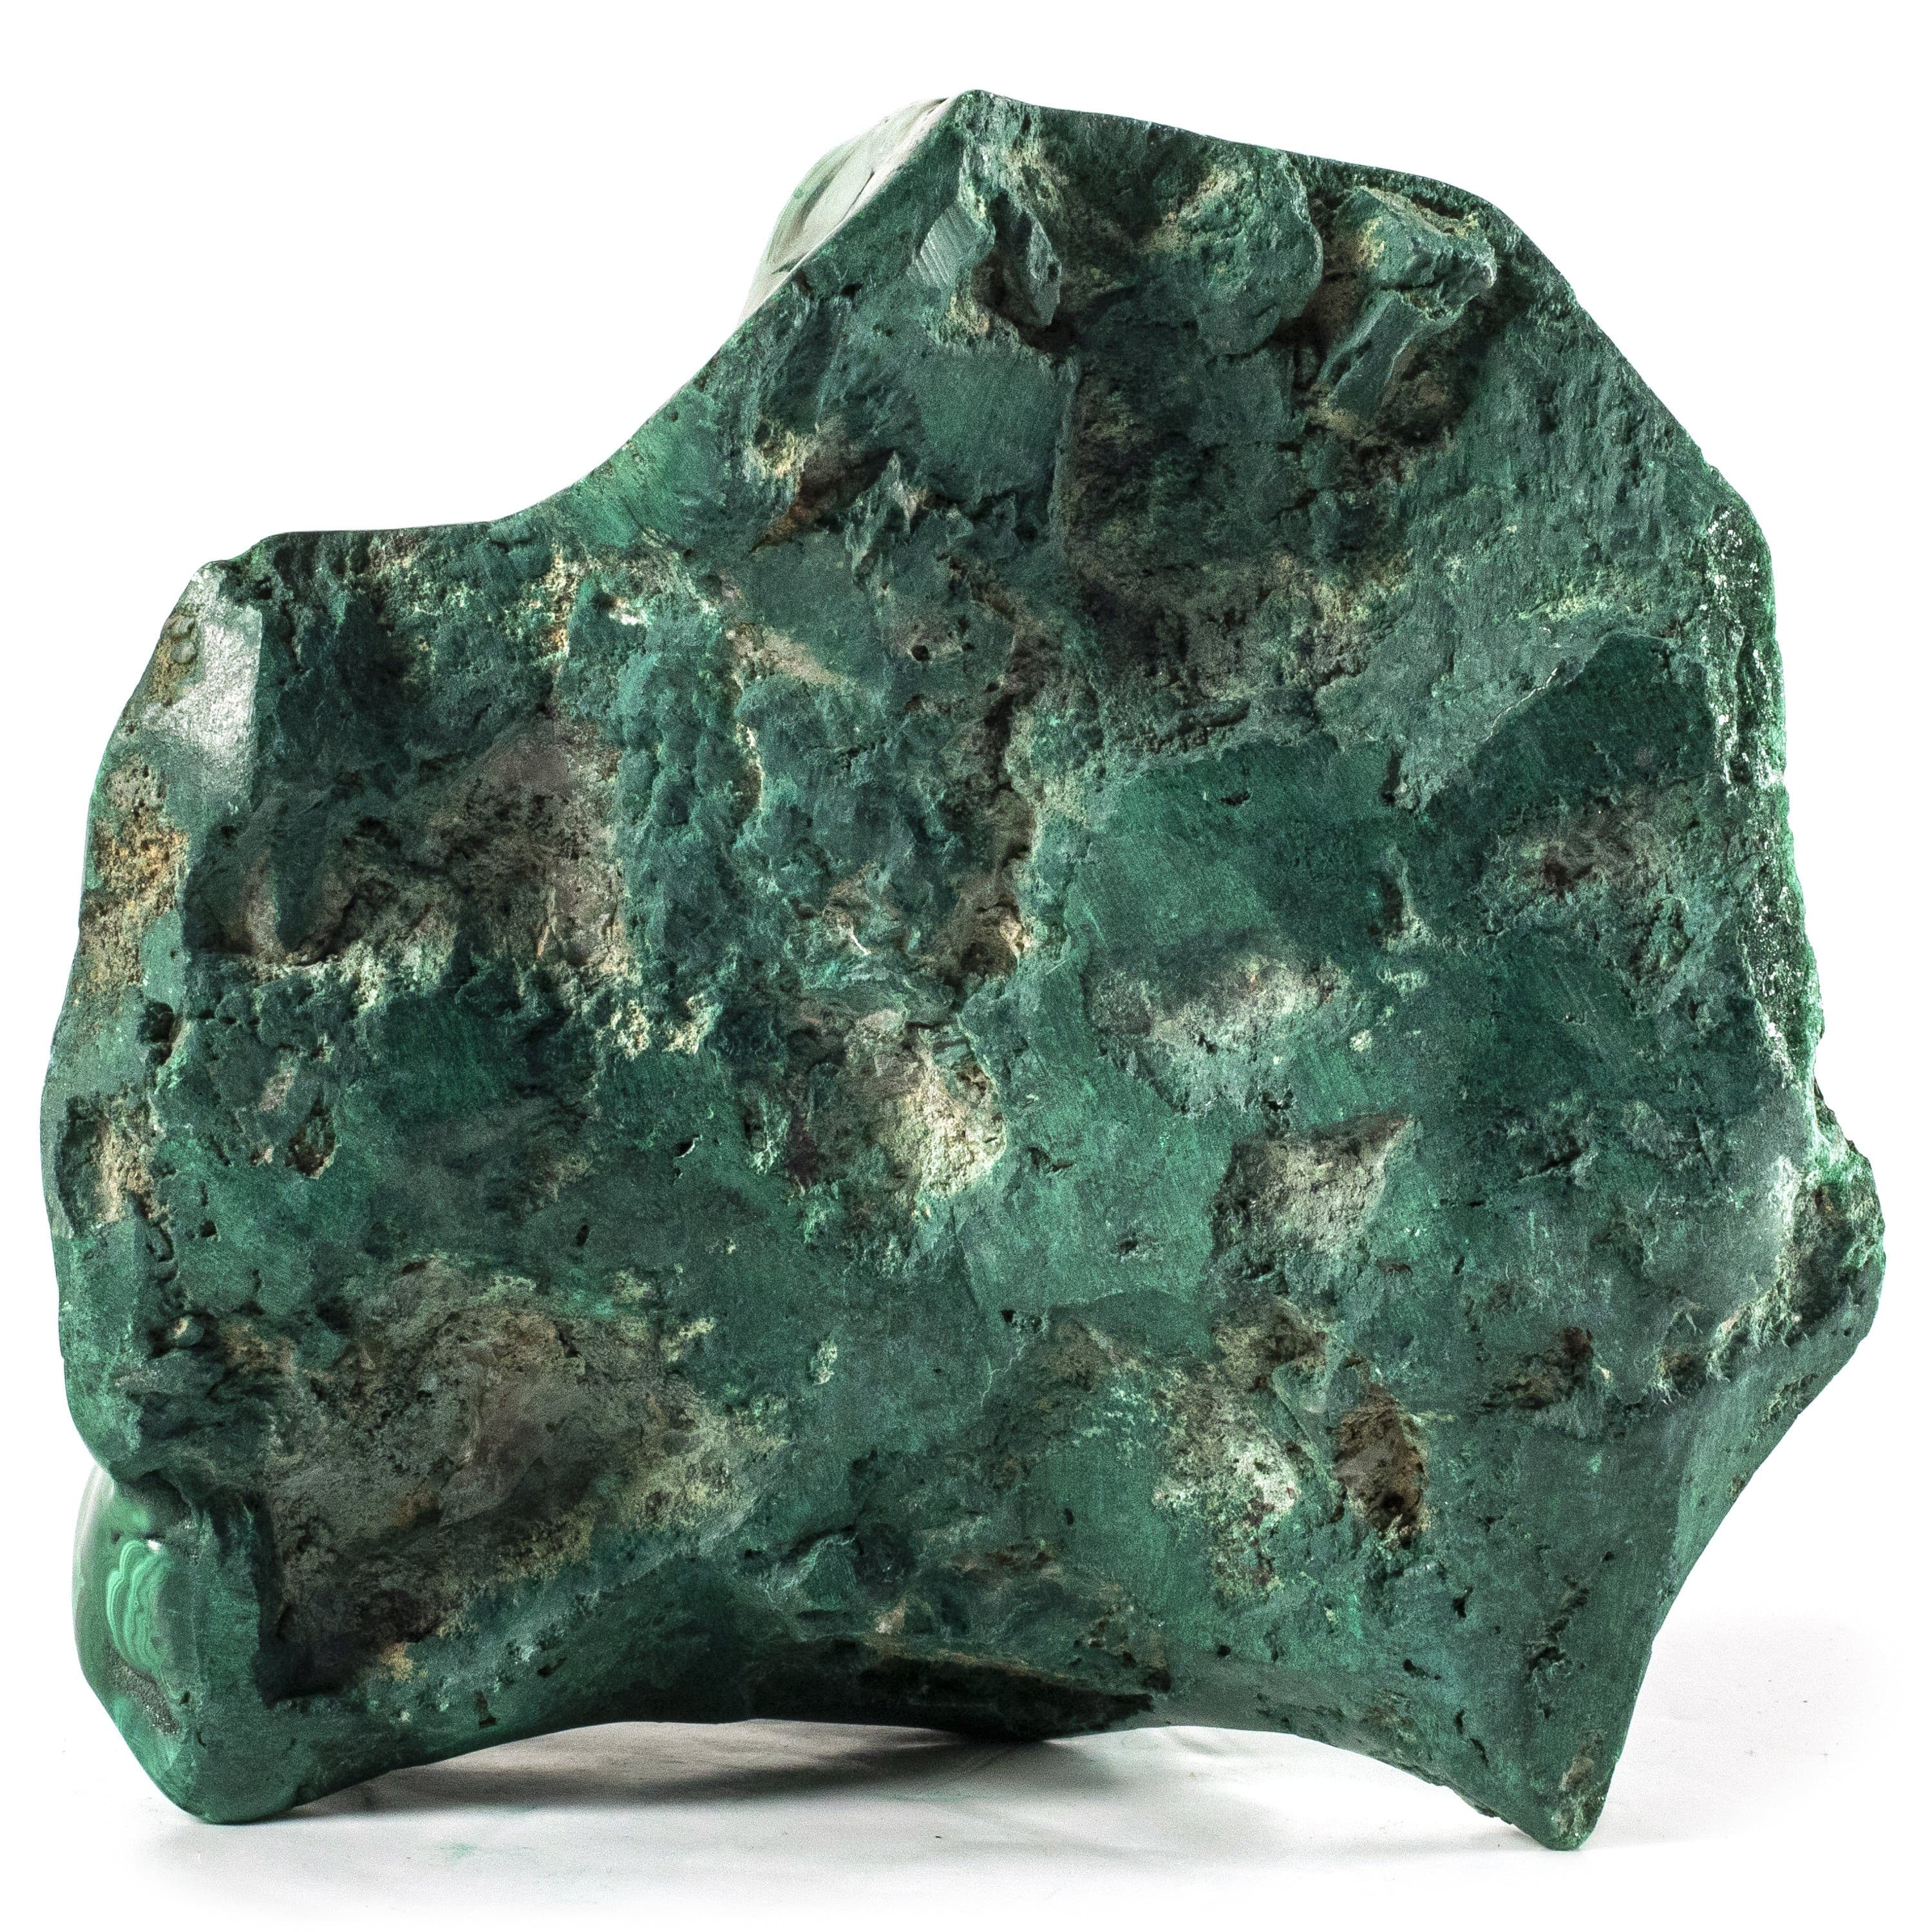 Kalifano Malachite Rare Natural Green Malachite Polished Freeform Specimen from Congo - 3.4 kg / 7.5 lbs MA2200.001